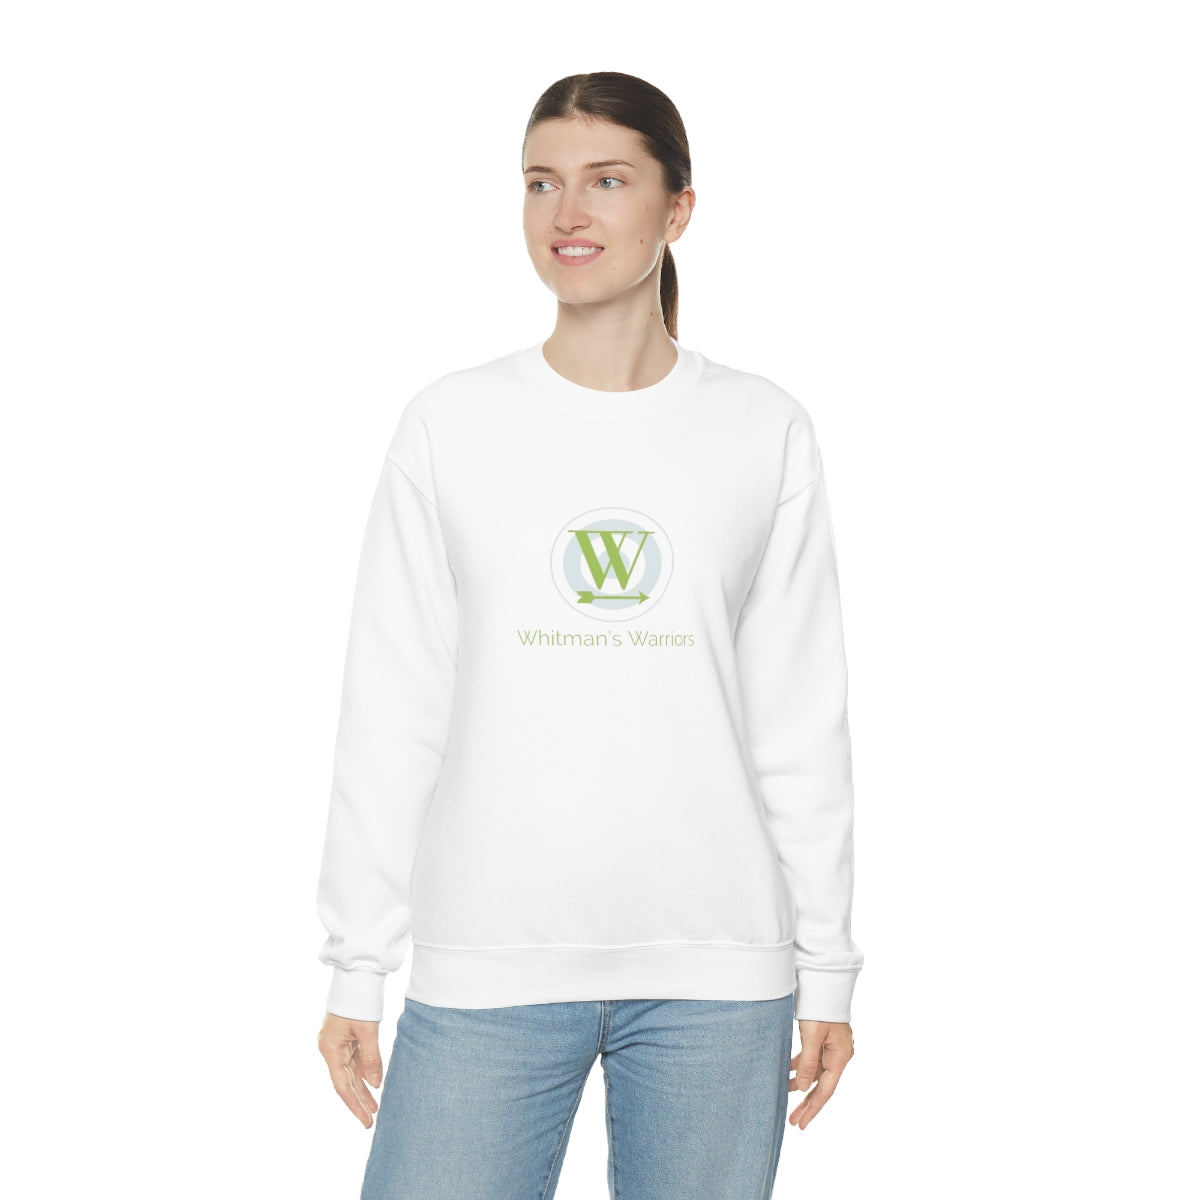 Whitman's Warriors Crewneck Sweatshirt